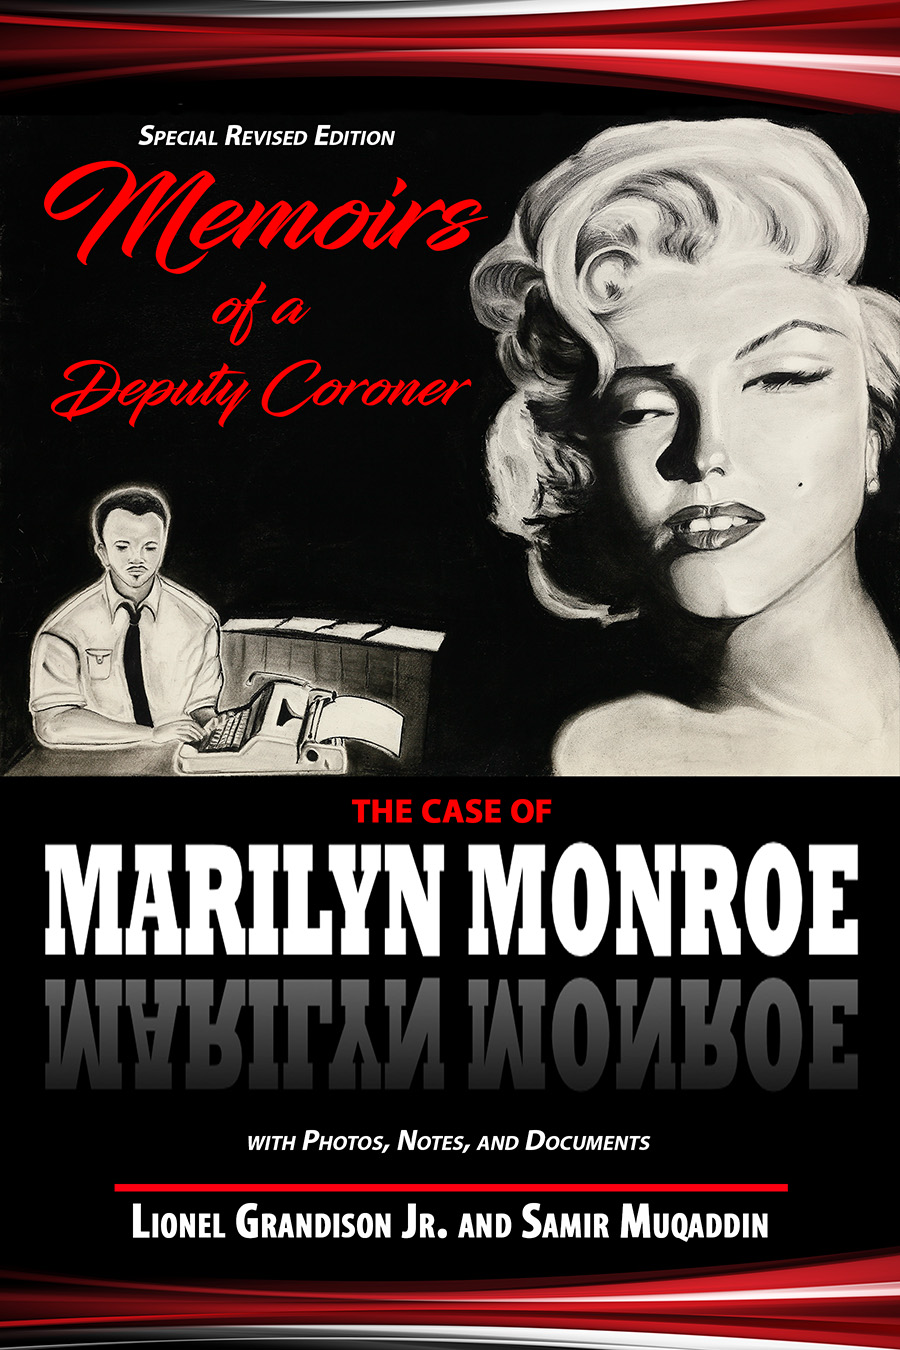 Memoirs of a Deputy Coroner The Case of Marilyn Monroe